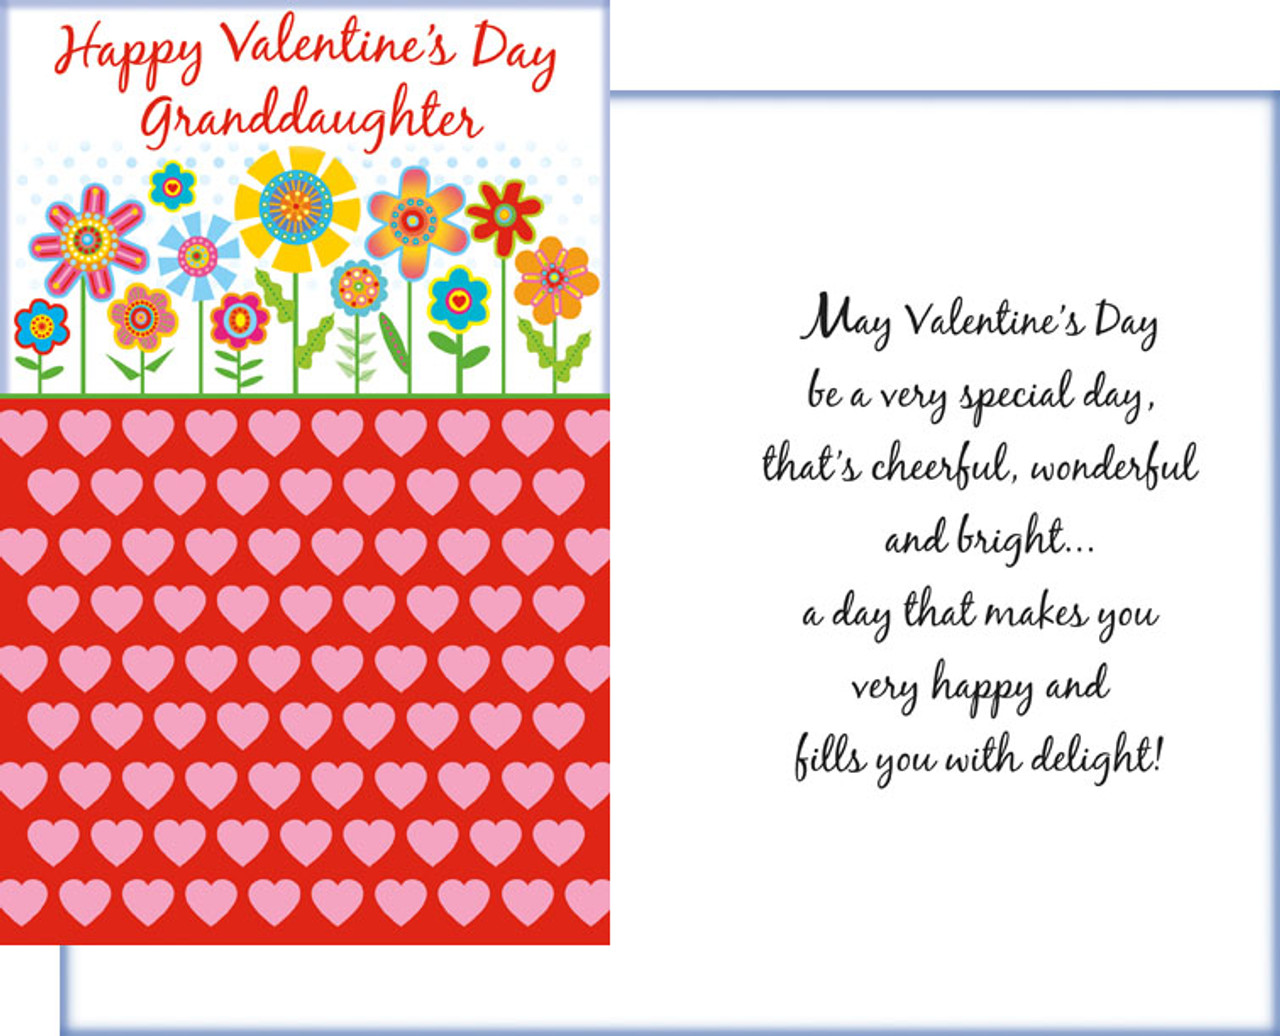 Graddaughter Valentine’s Day Greeting Card w/Envelope NEW 